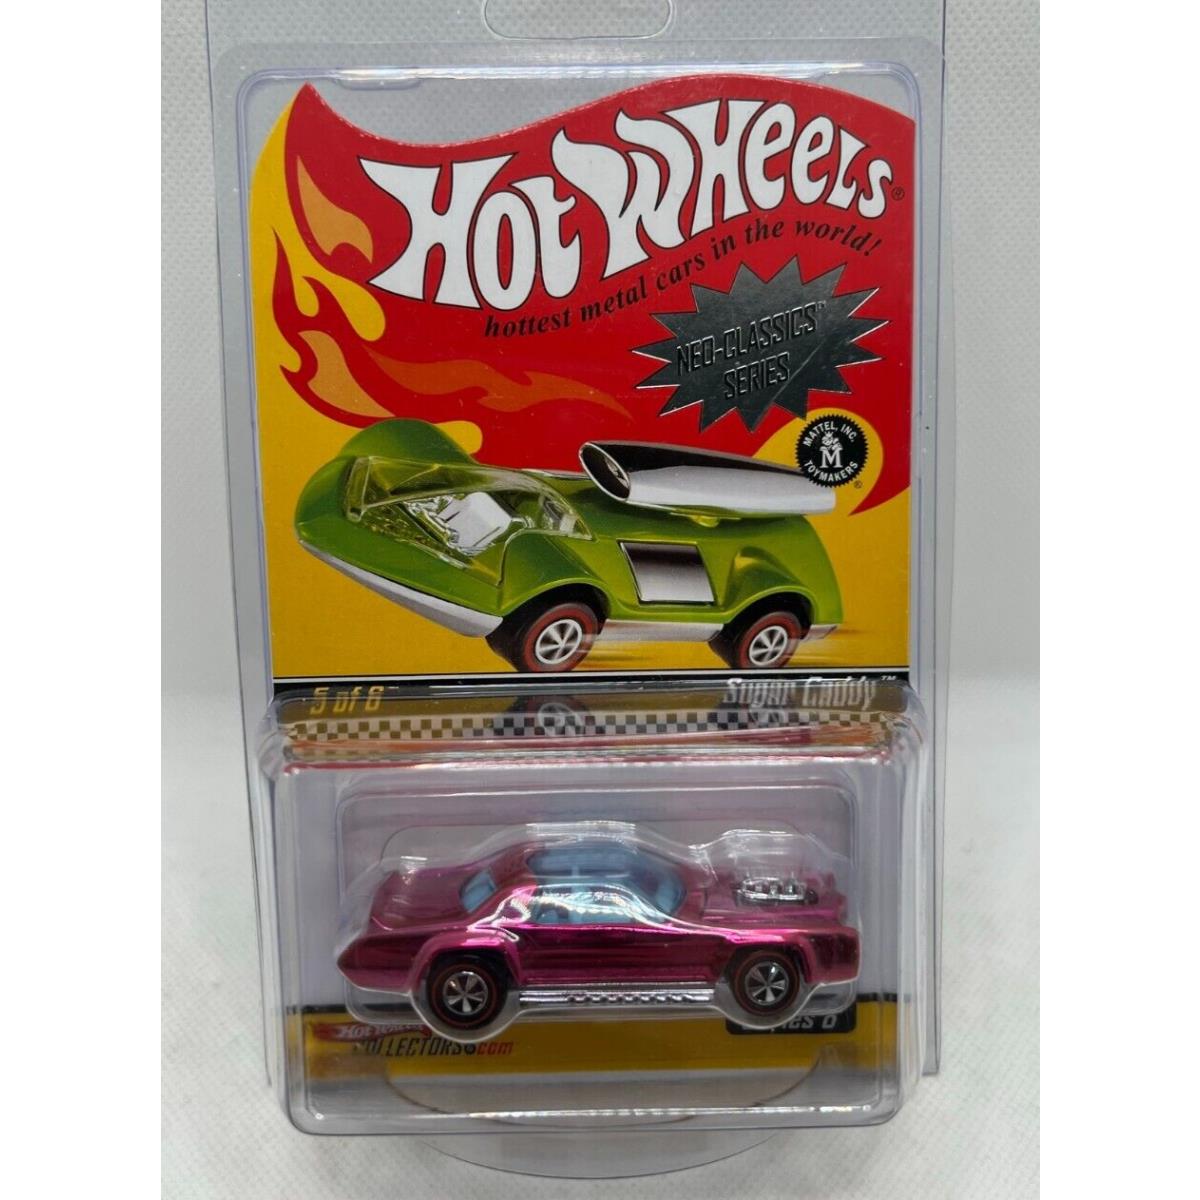 Hot Wheels Neo-classics Series 8 Sugar Caddy Redline Tires 4331/8500 W/case